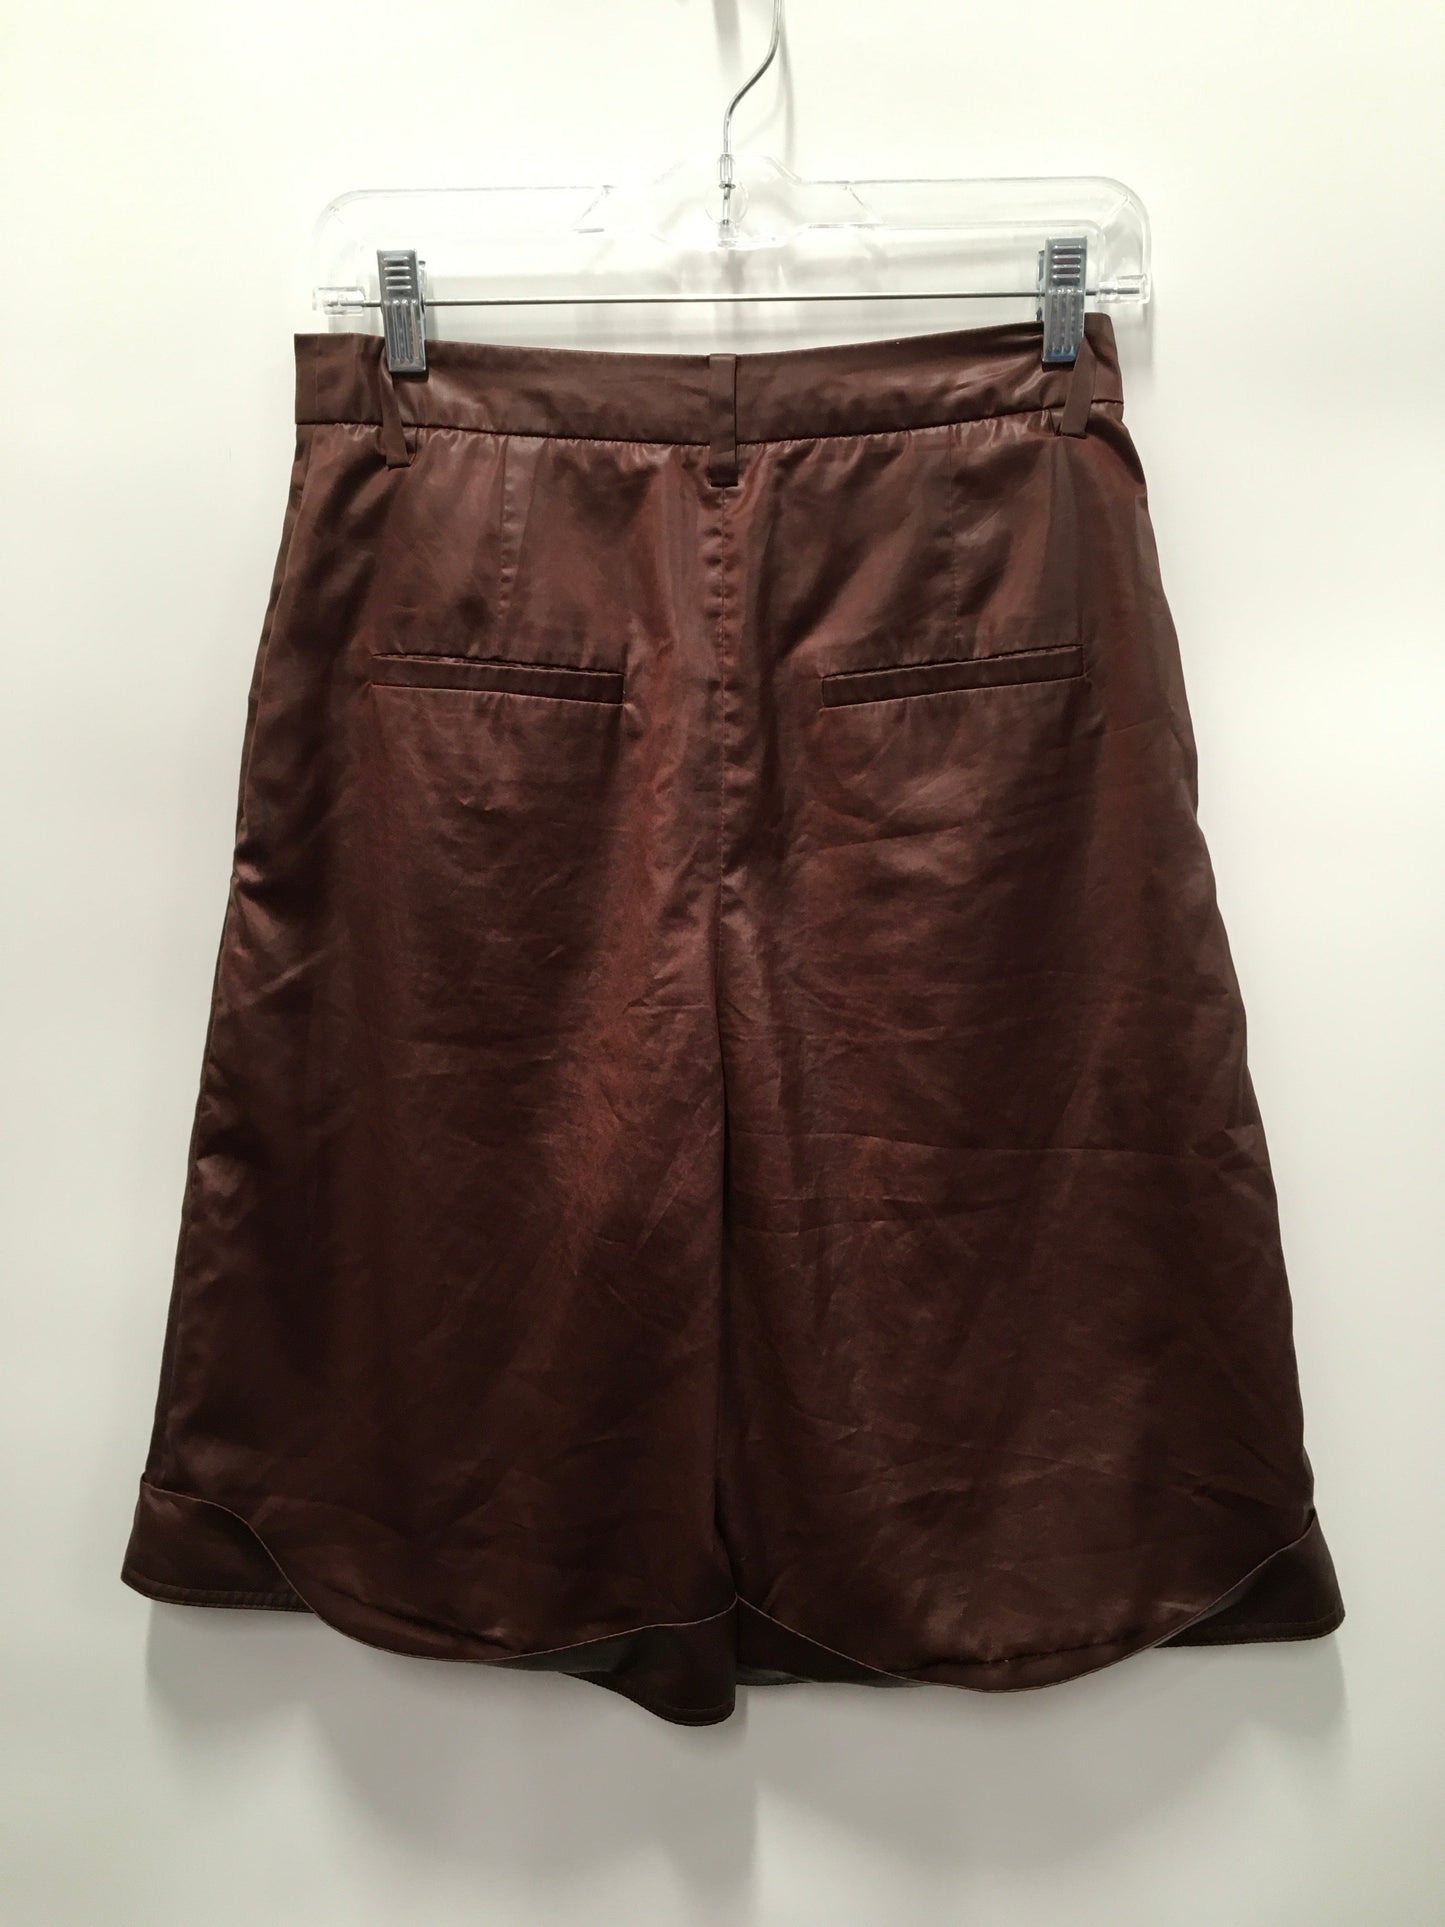 Maroon Shorts Tibi, Size 2